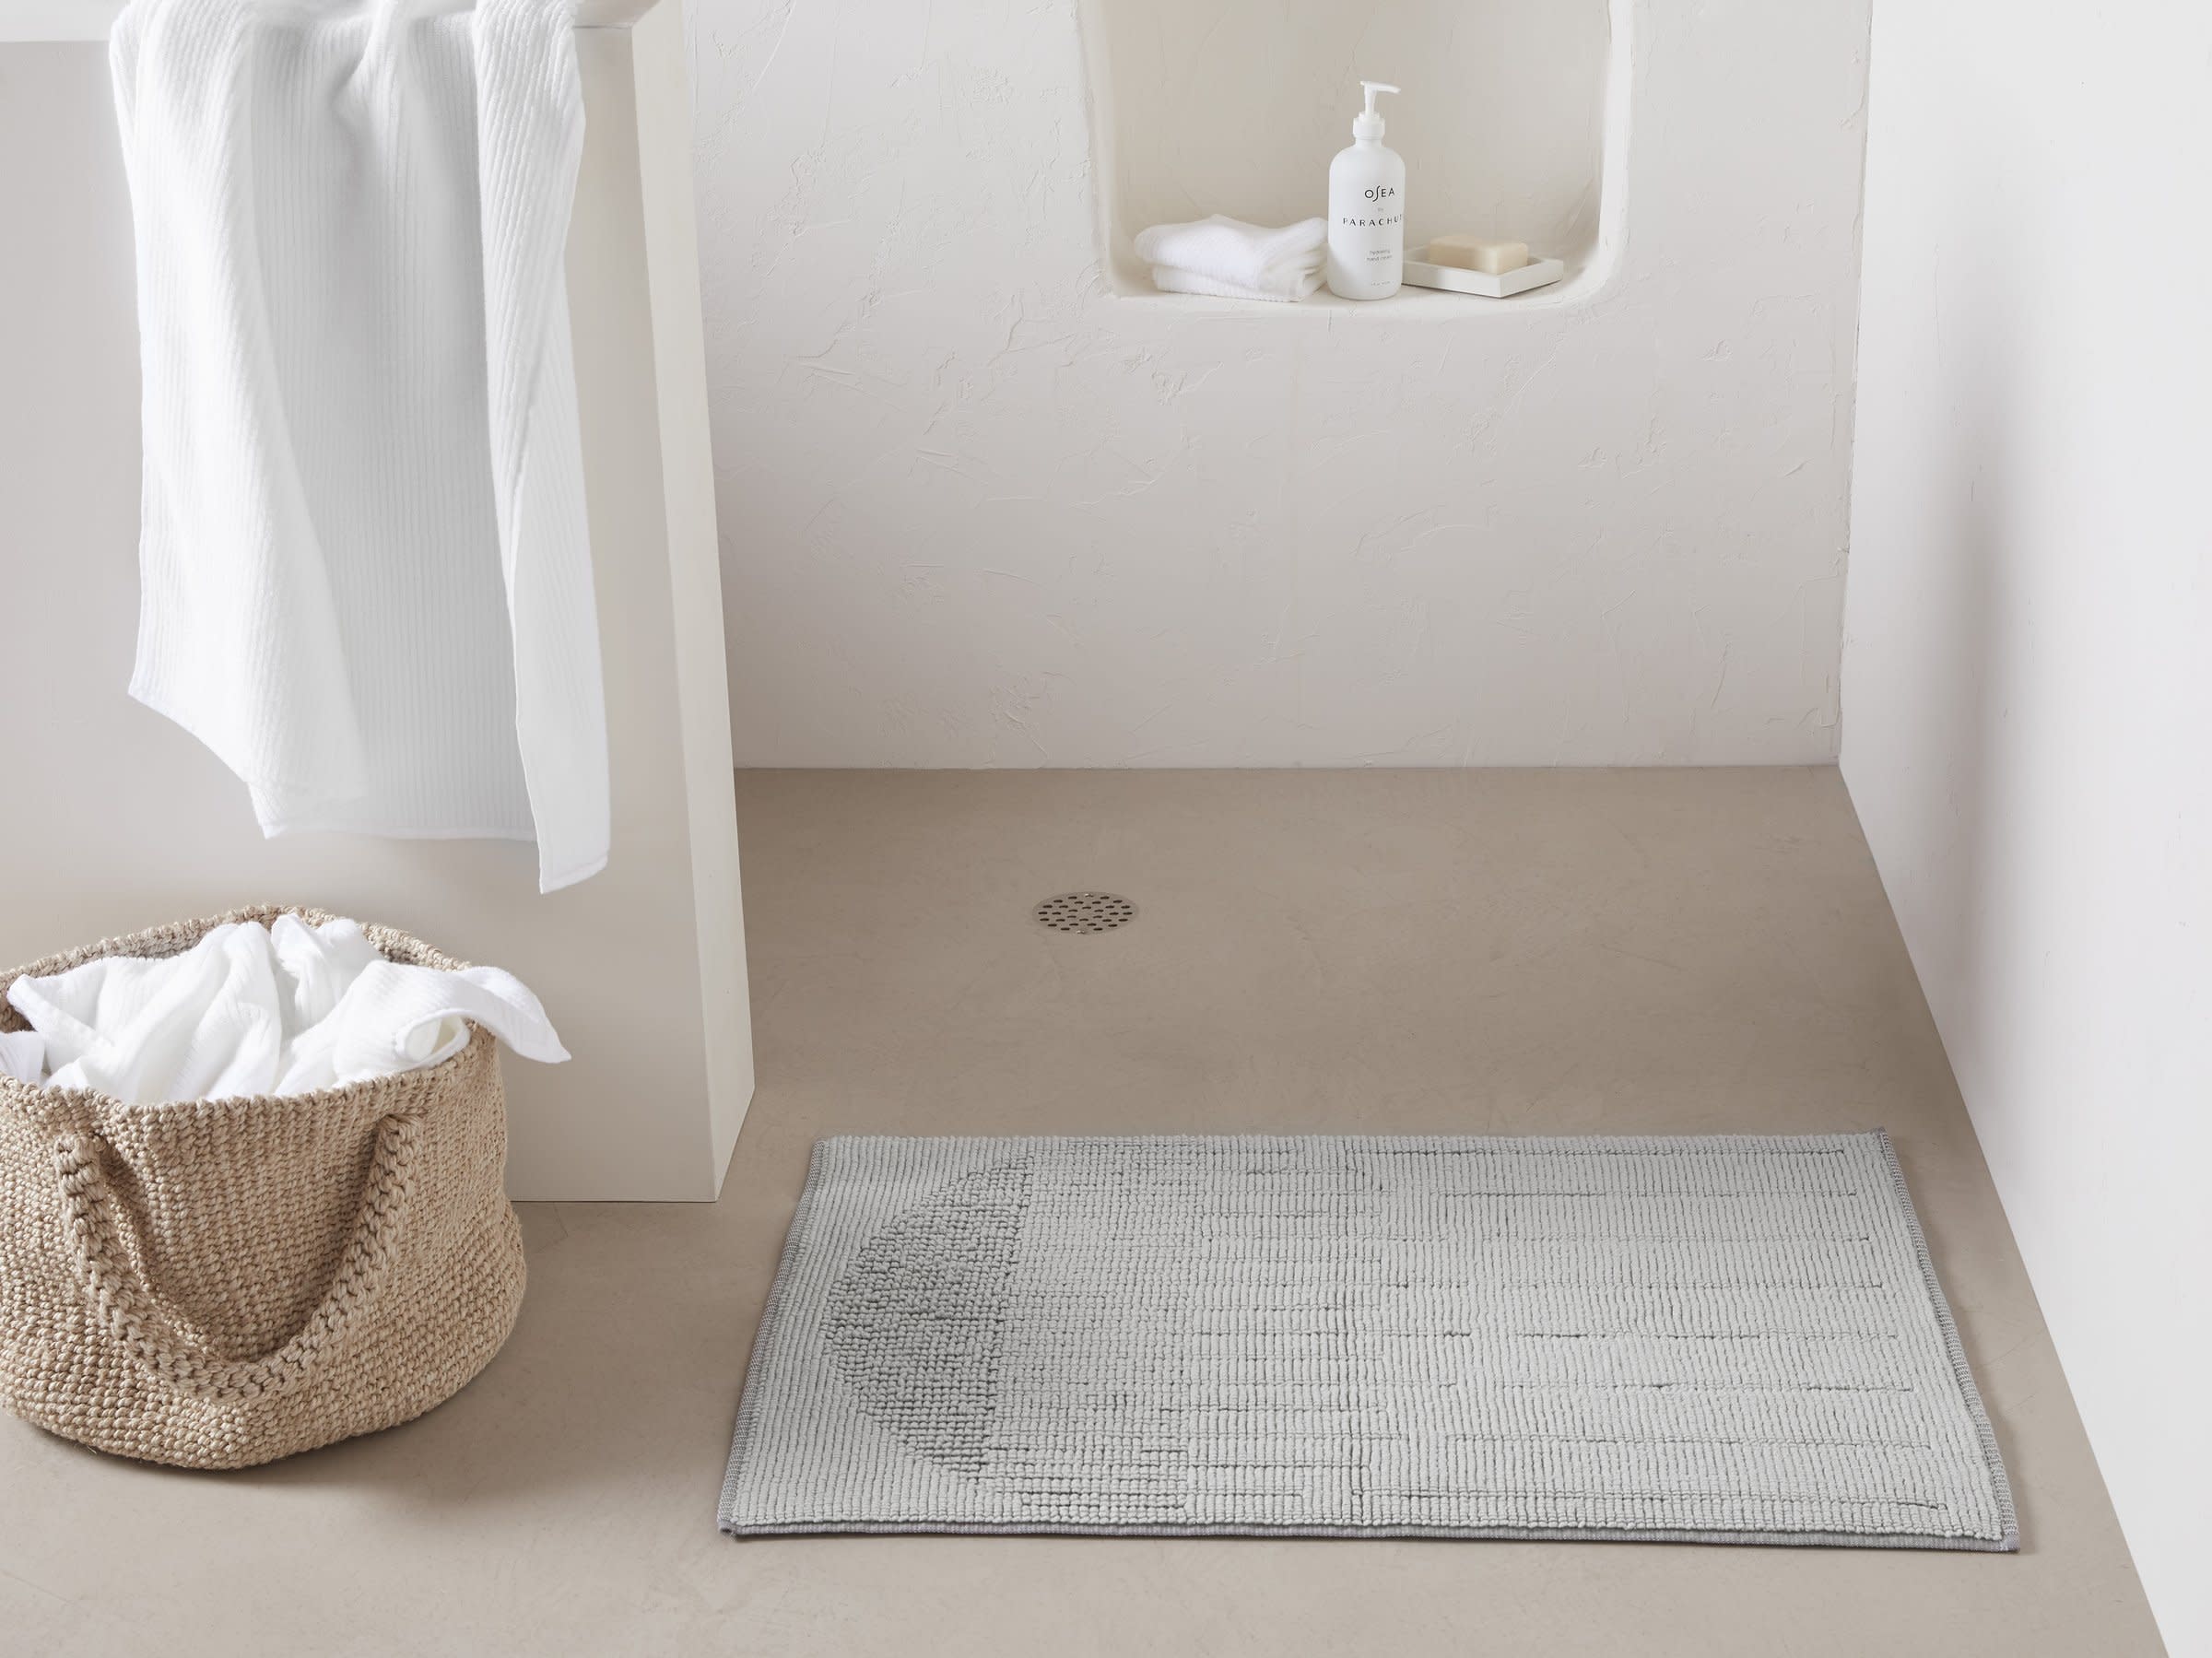 Light Grey And Dark Grey Sunset Bath Rug Shown In A Room